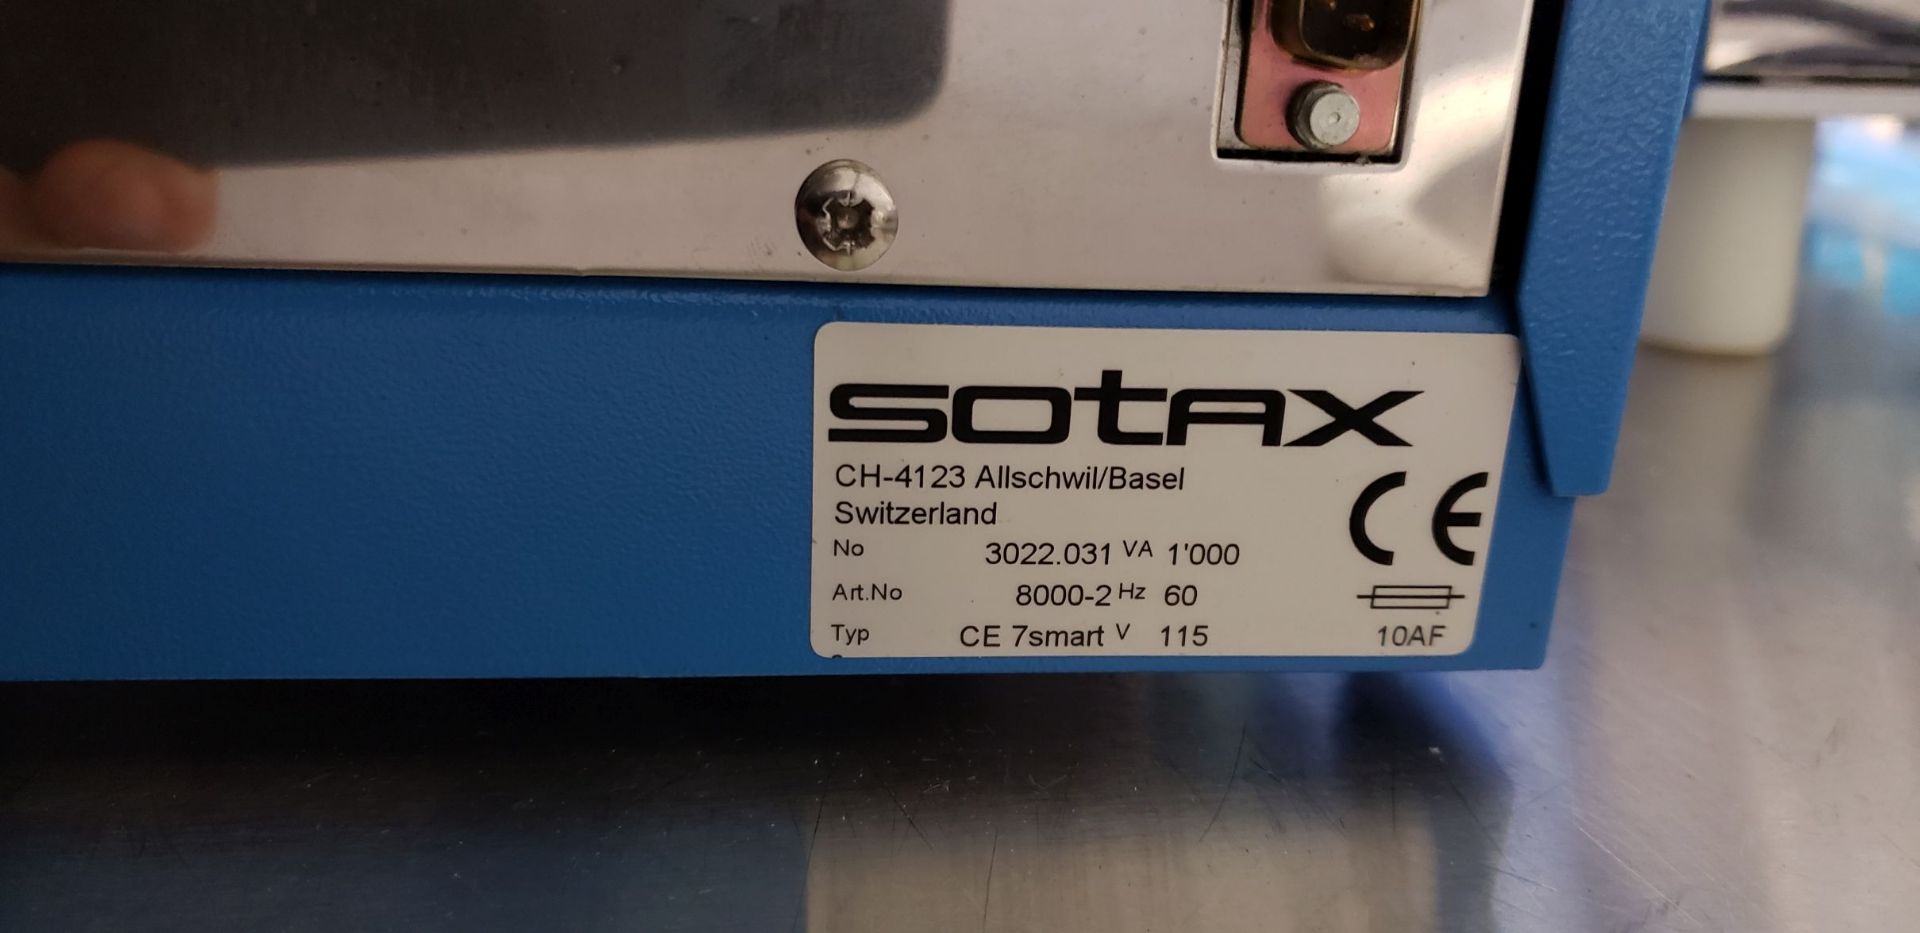 Sotax CE 7 Smart USP Flow through Dissolution System - Image 13 of 36